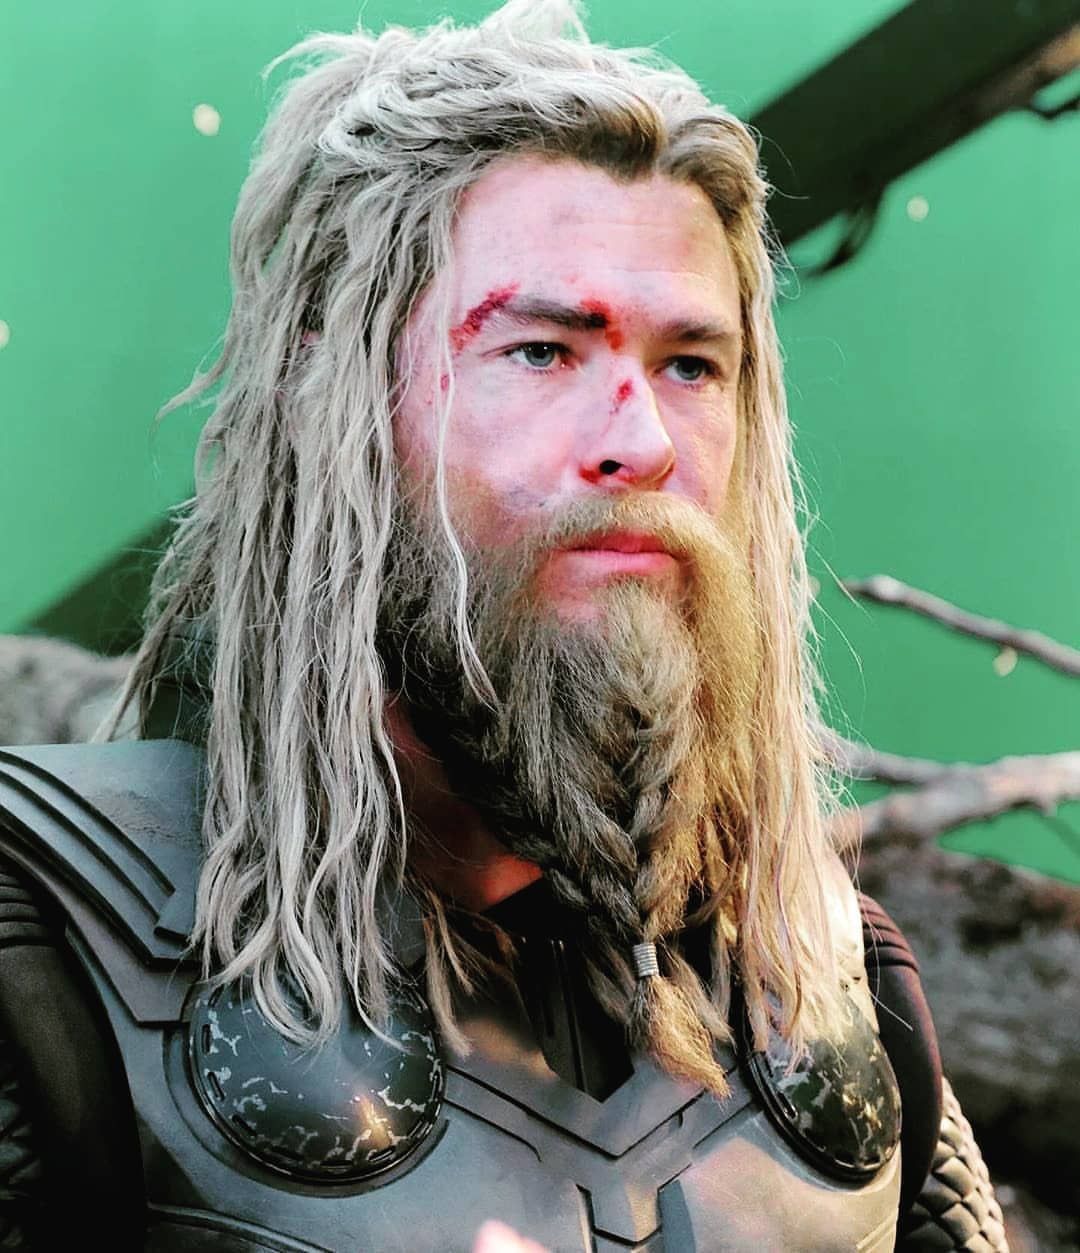 I love Fat Thor with the braided beard. Marvel movies, Hemsworth